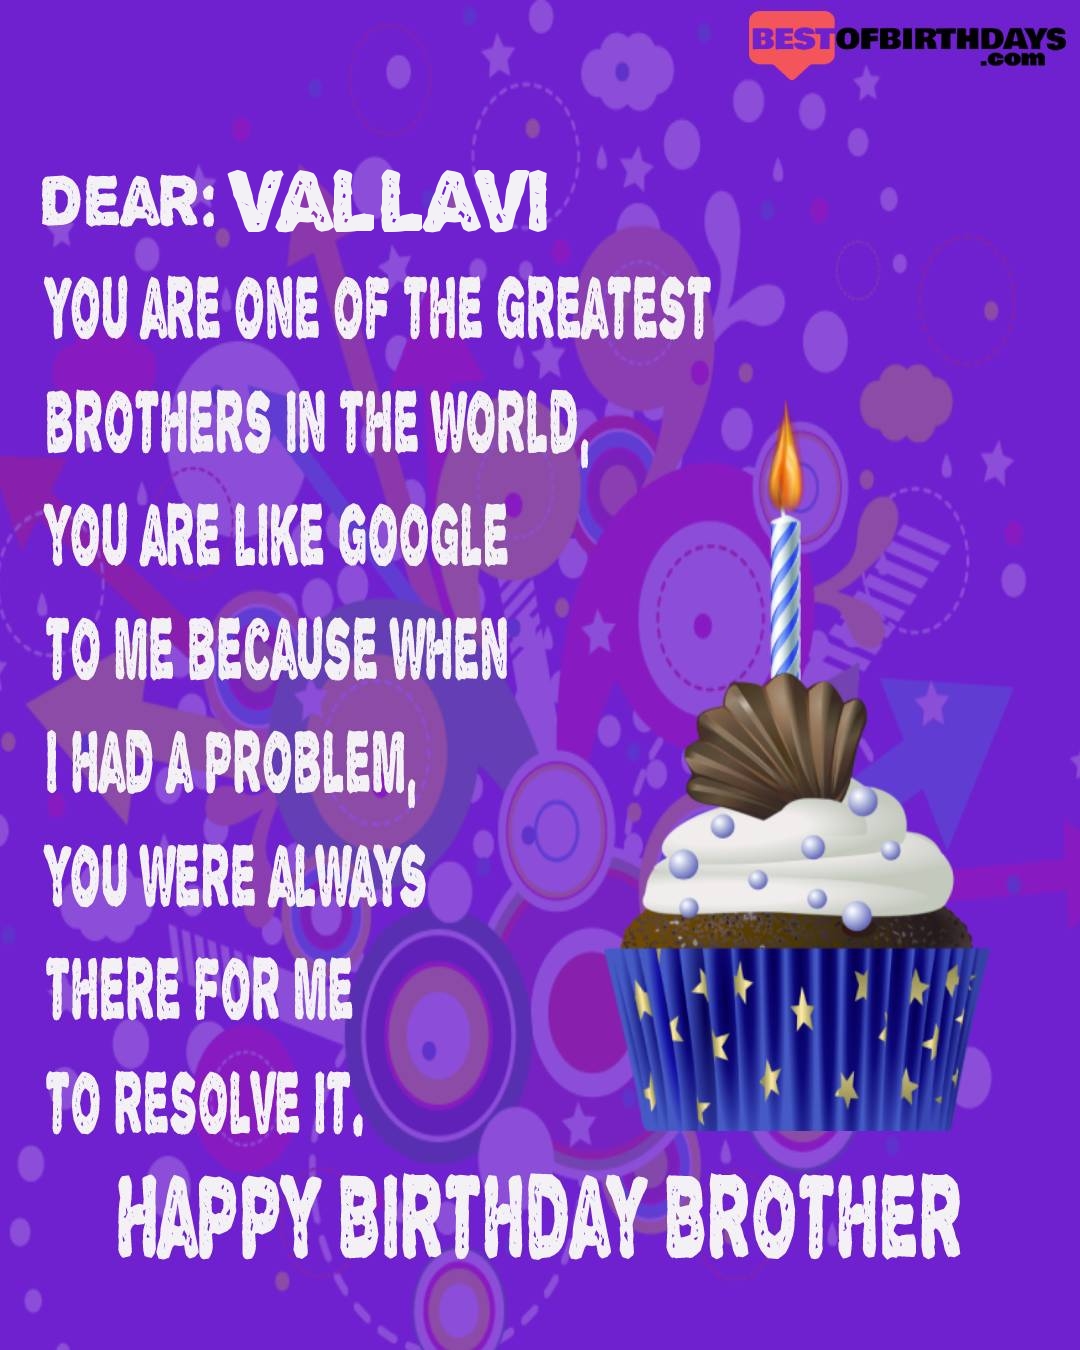 Happy birthday vallavi bhai brother bro